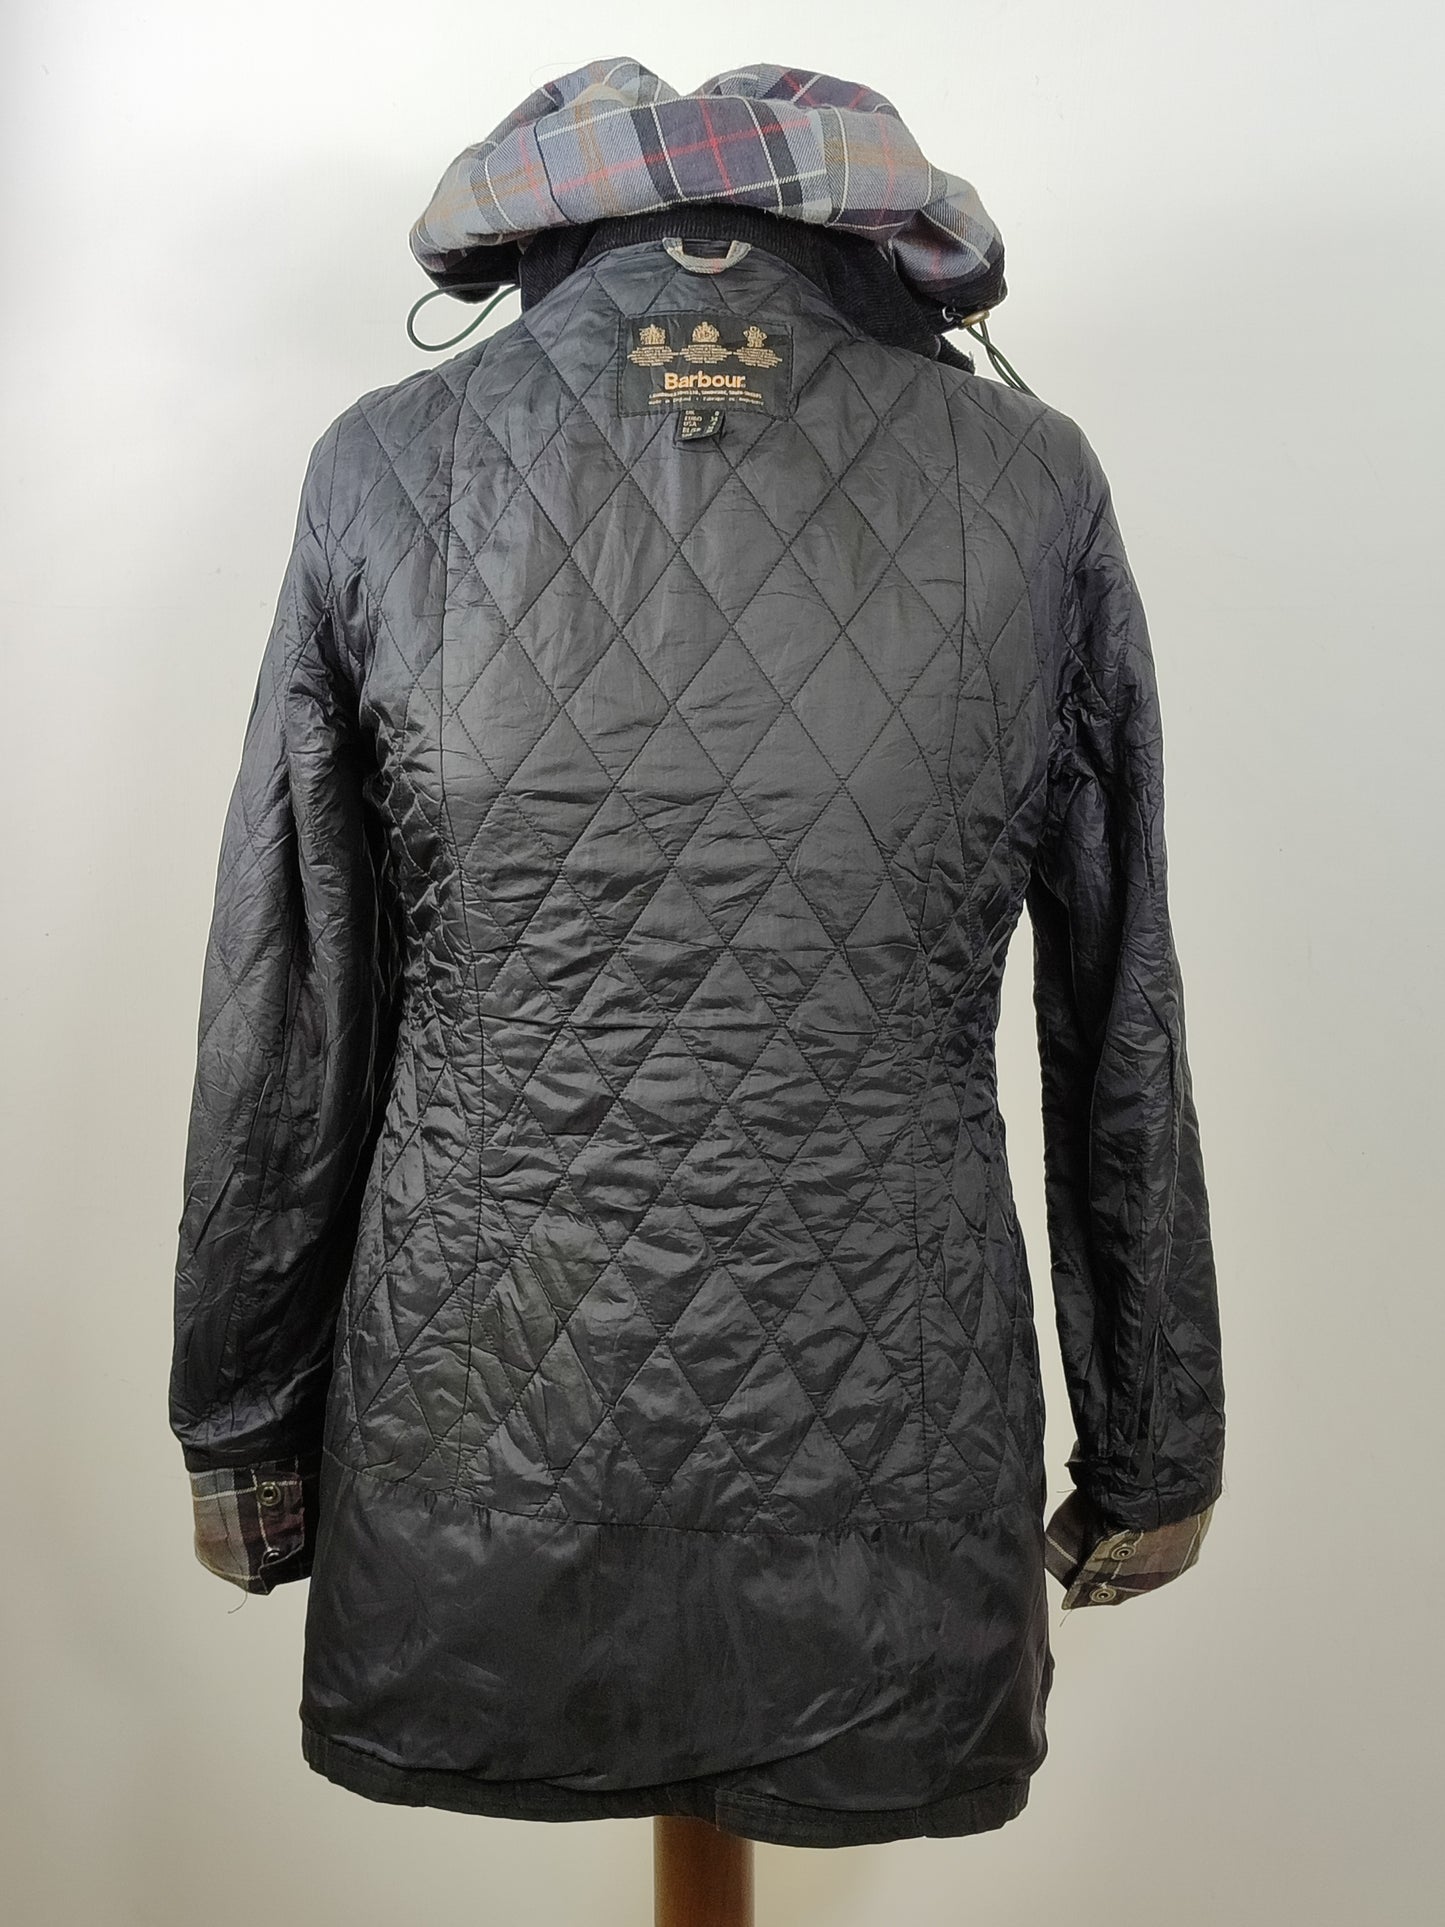 Giacca Barbour donna nera Rebel UK8 XSmall Black Lady Wax Rebel jacket XSmall tg.38